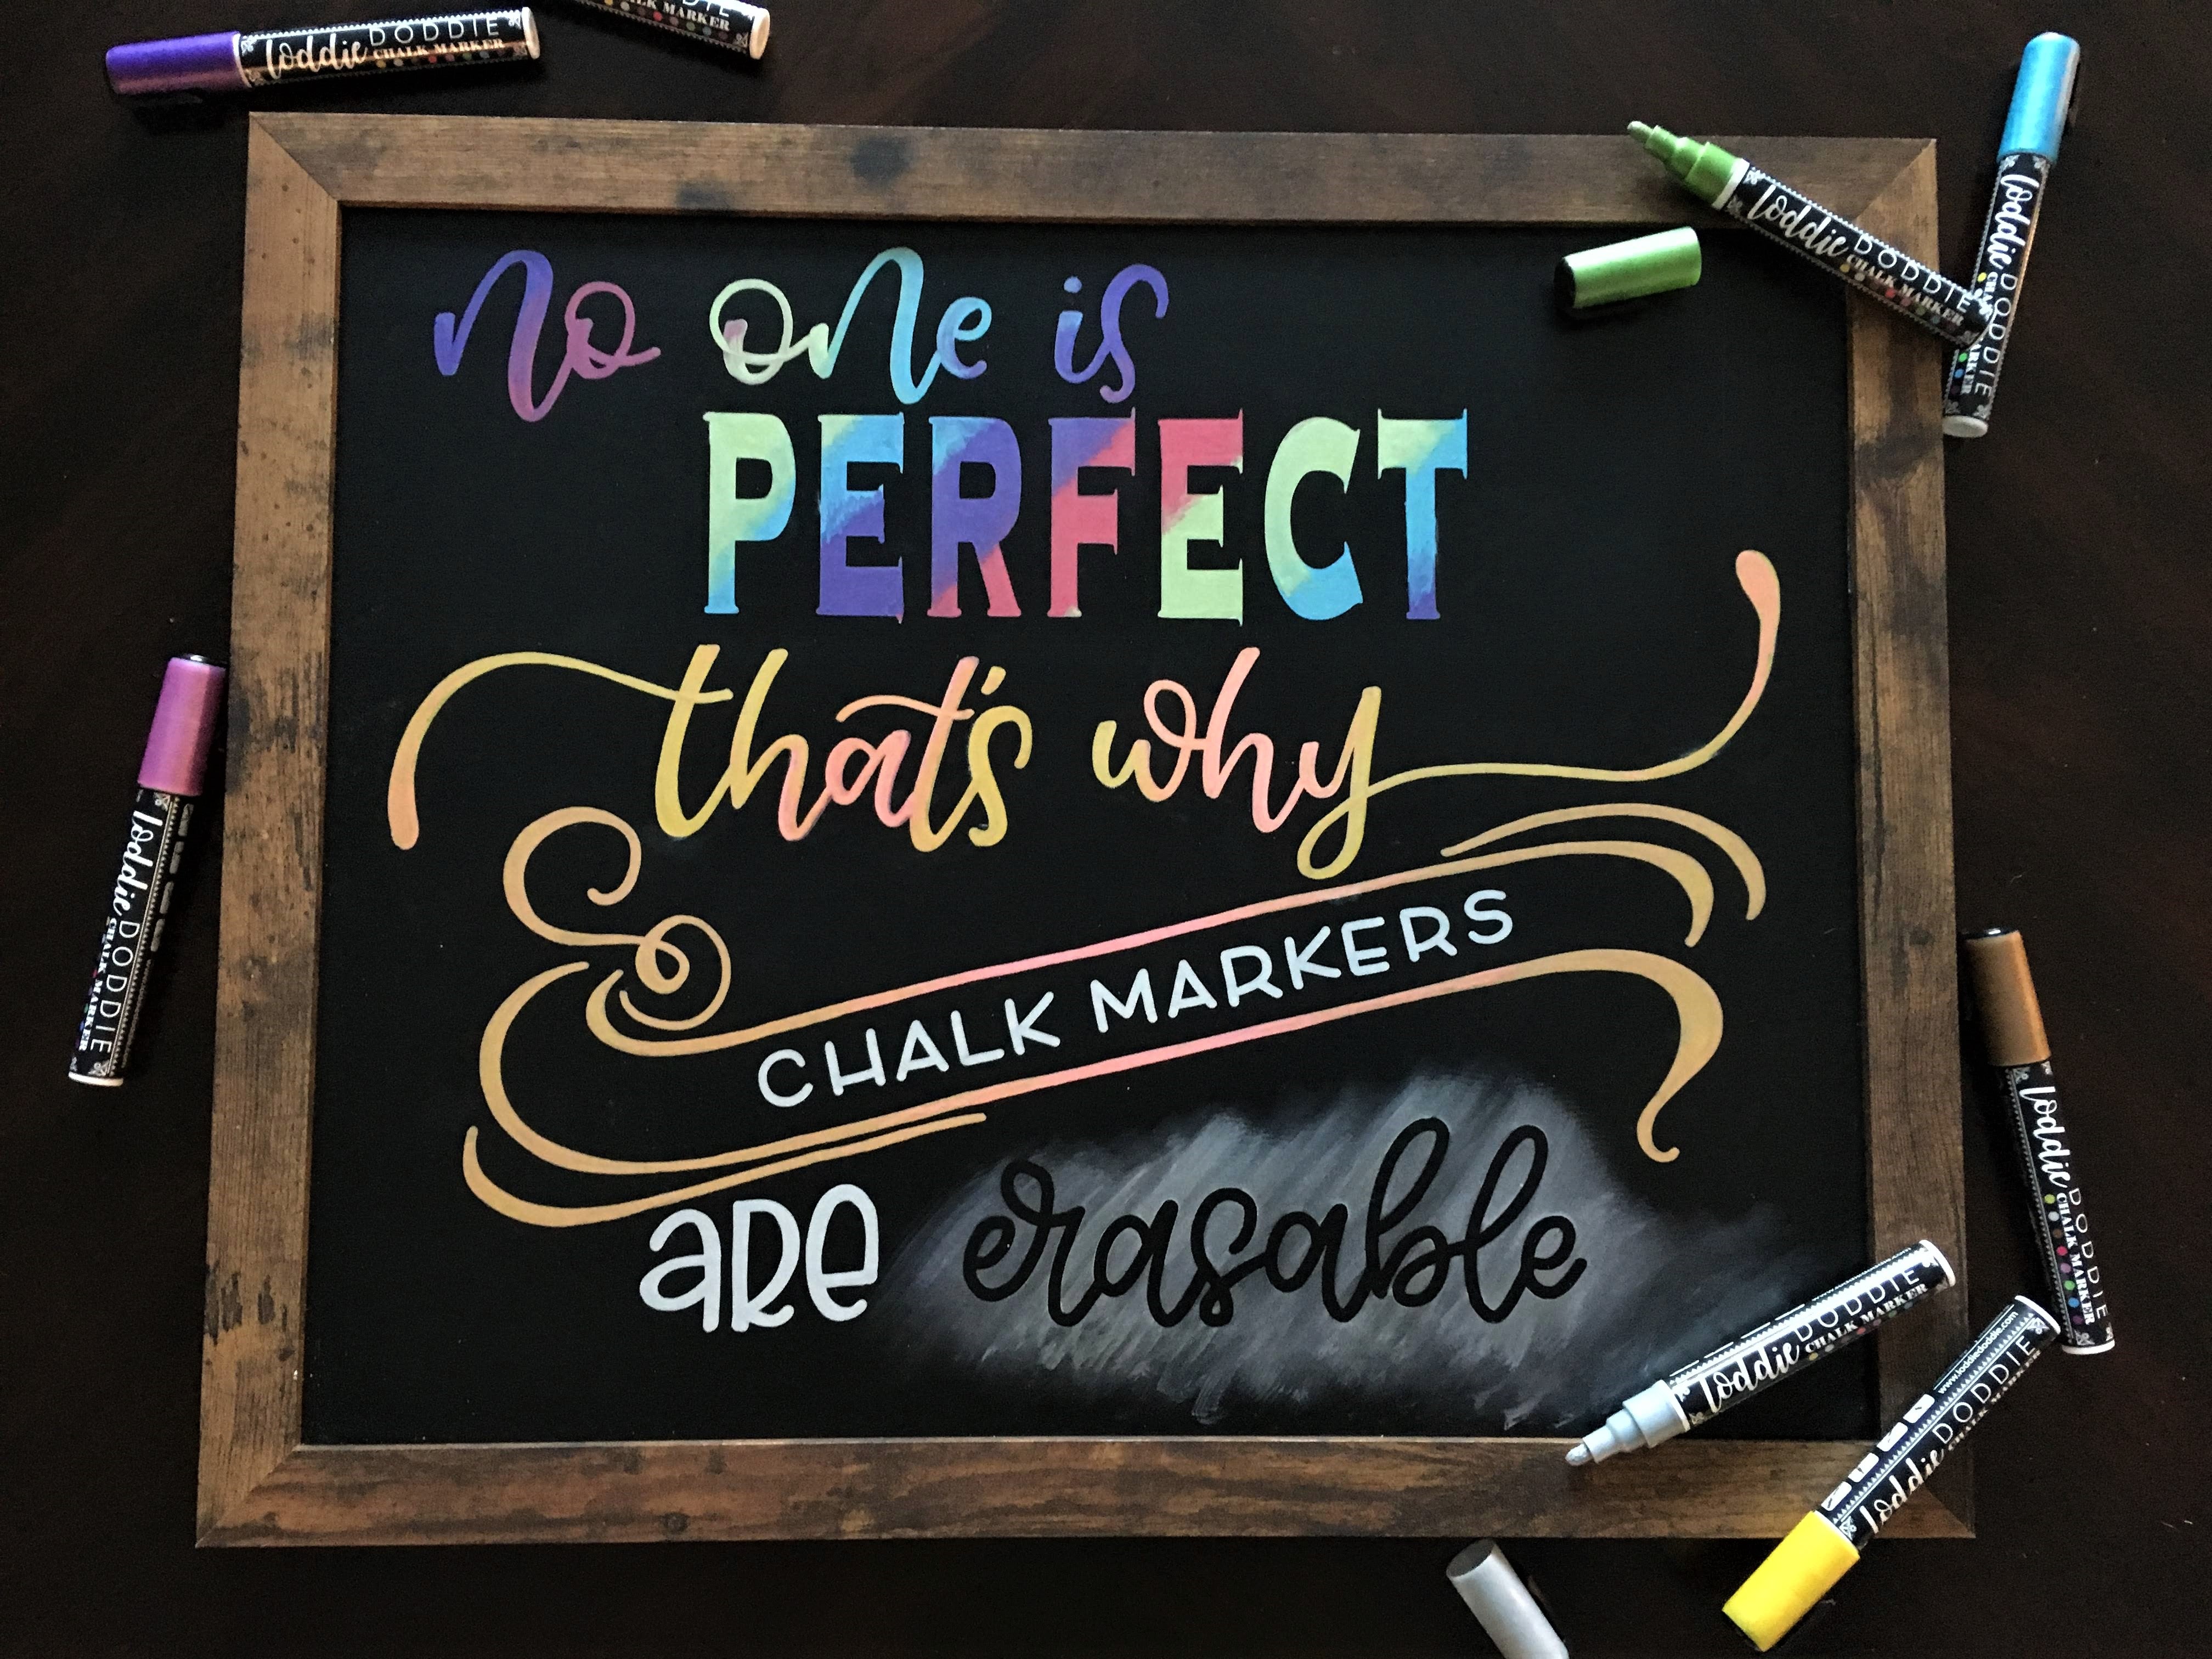 Loddie Doddie Liquid Chalk Markers | Dust Free Chalk Pens - Perfect for Chalkboards, Blackboards, Windows and Glass | 1mm Fine Point Tip Erasable